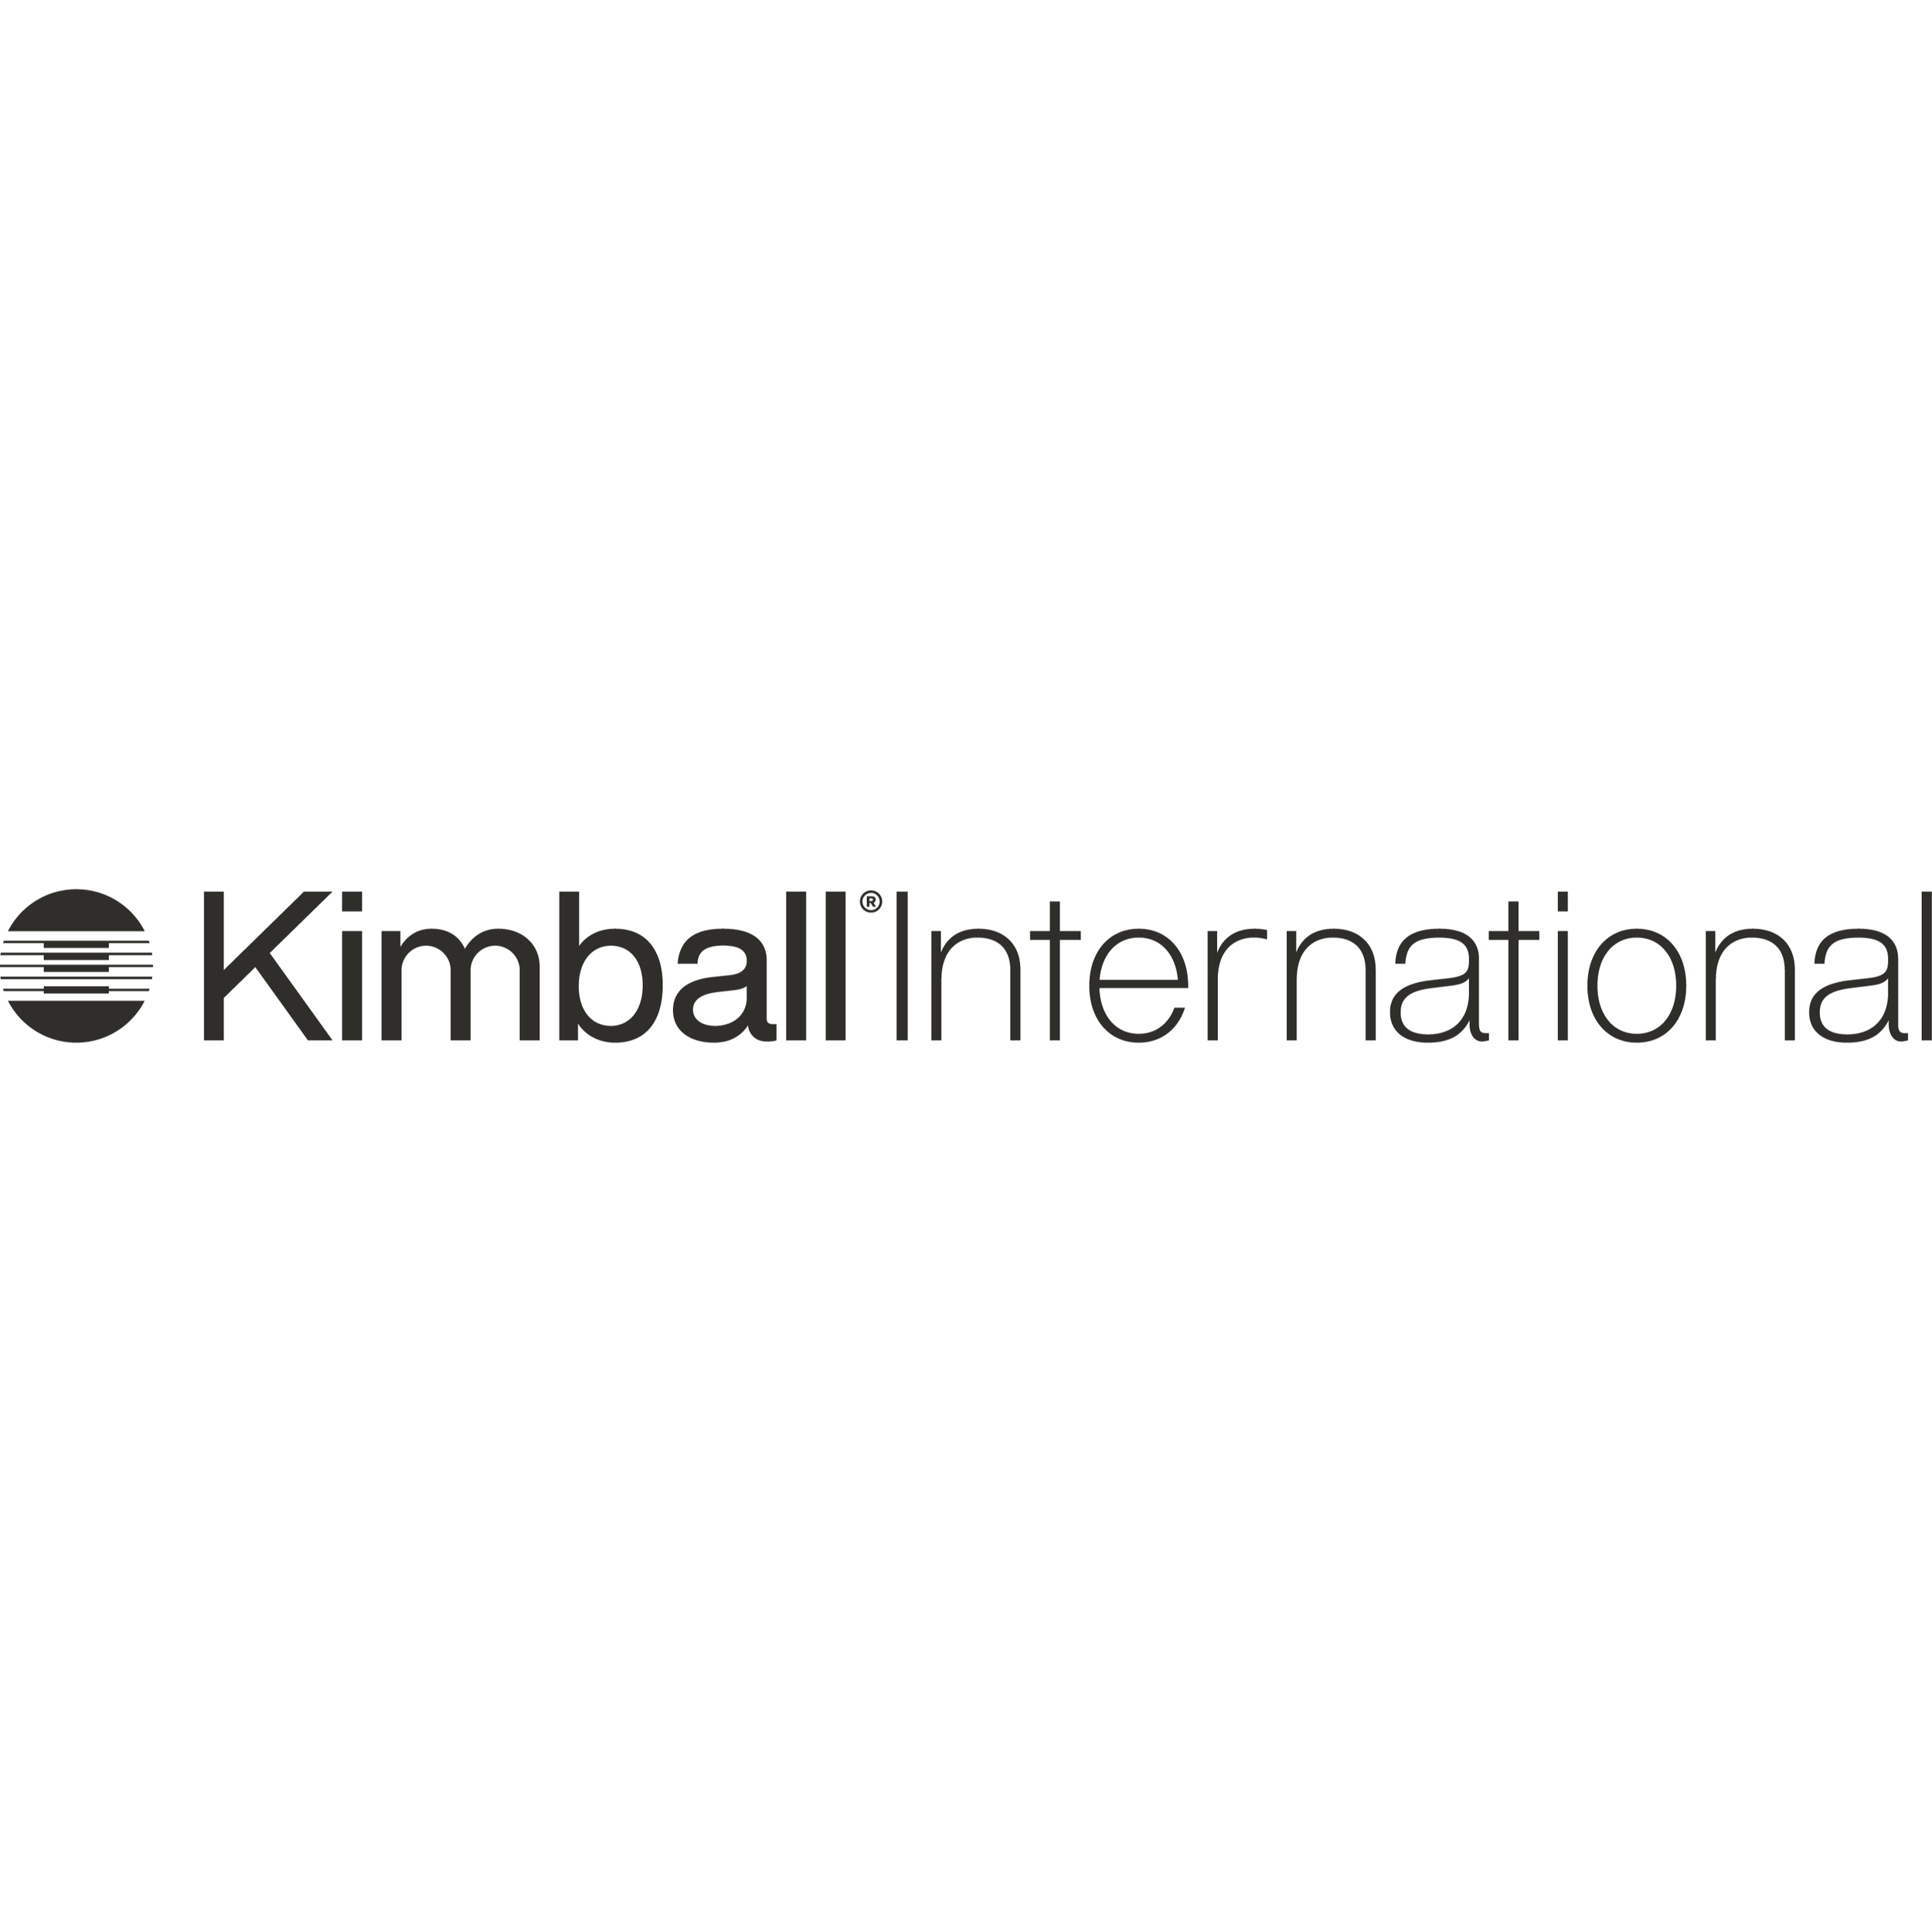 GOLD - Kimball International.png